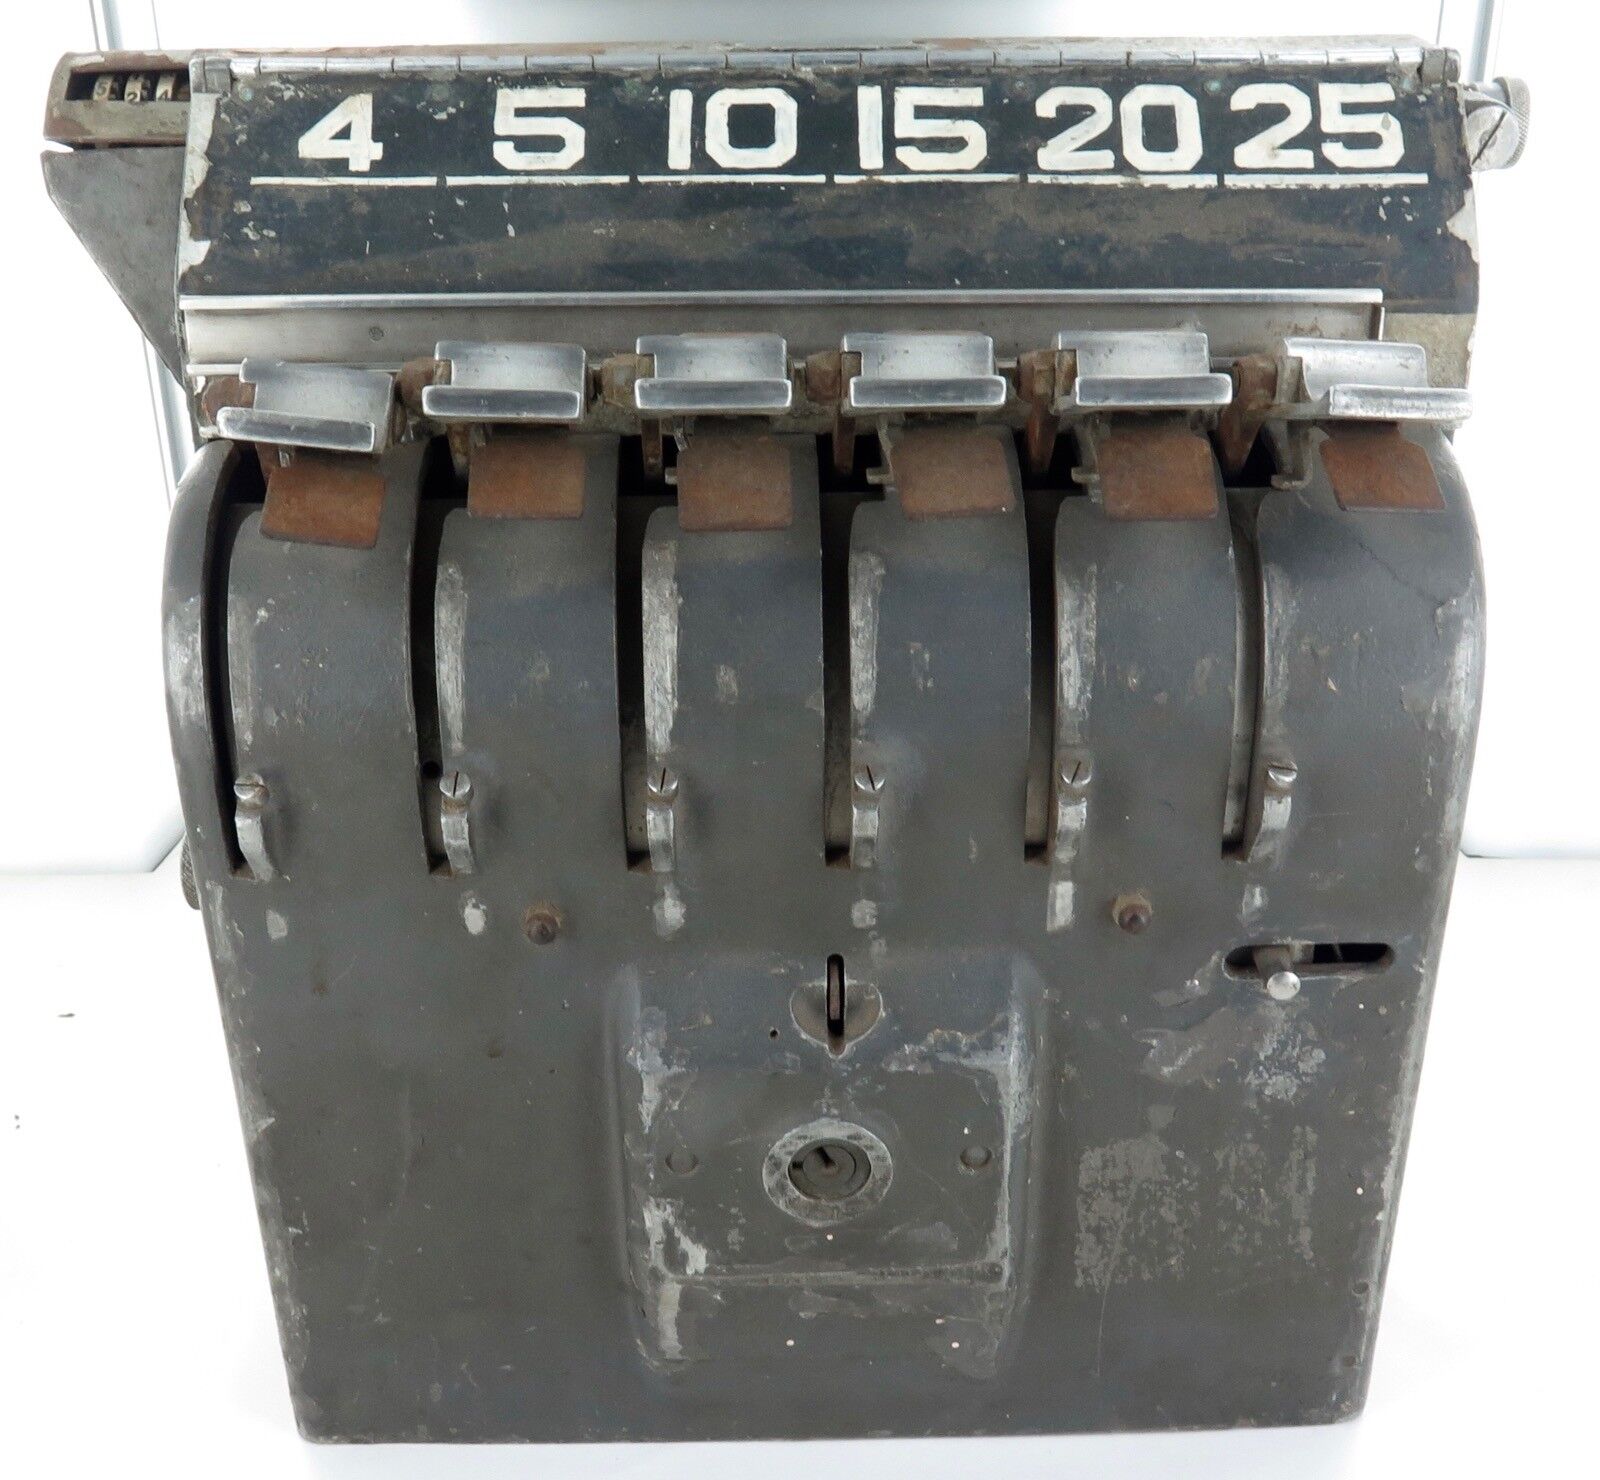 .SCARCE c 1960’s HUGE SOLOMATIC TICKET MACHINE. EX WYNNUM (QLD) BUS COMPANY.